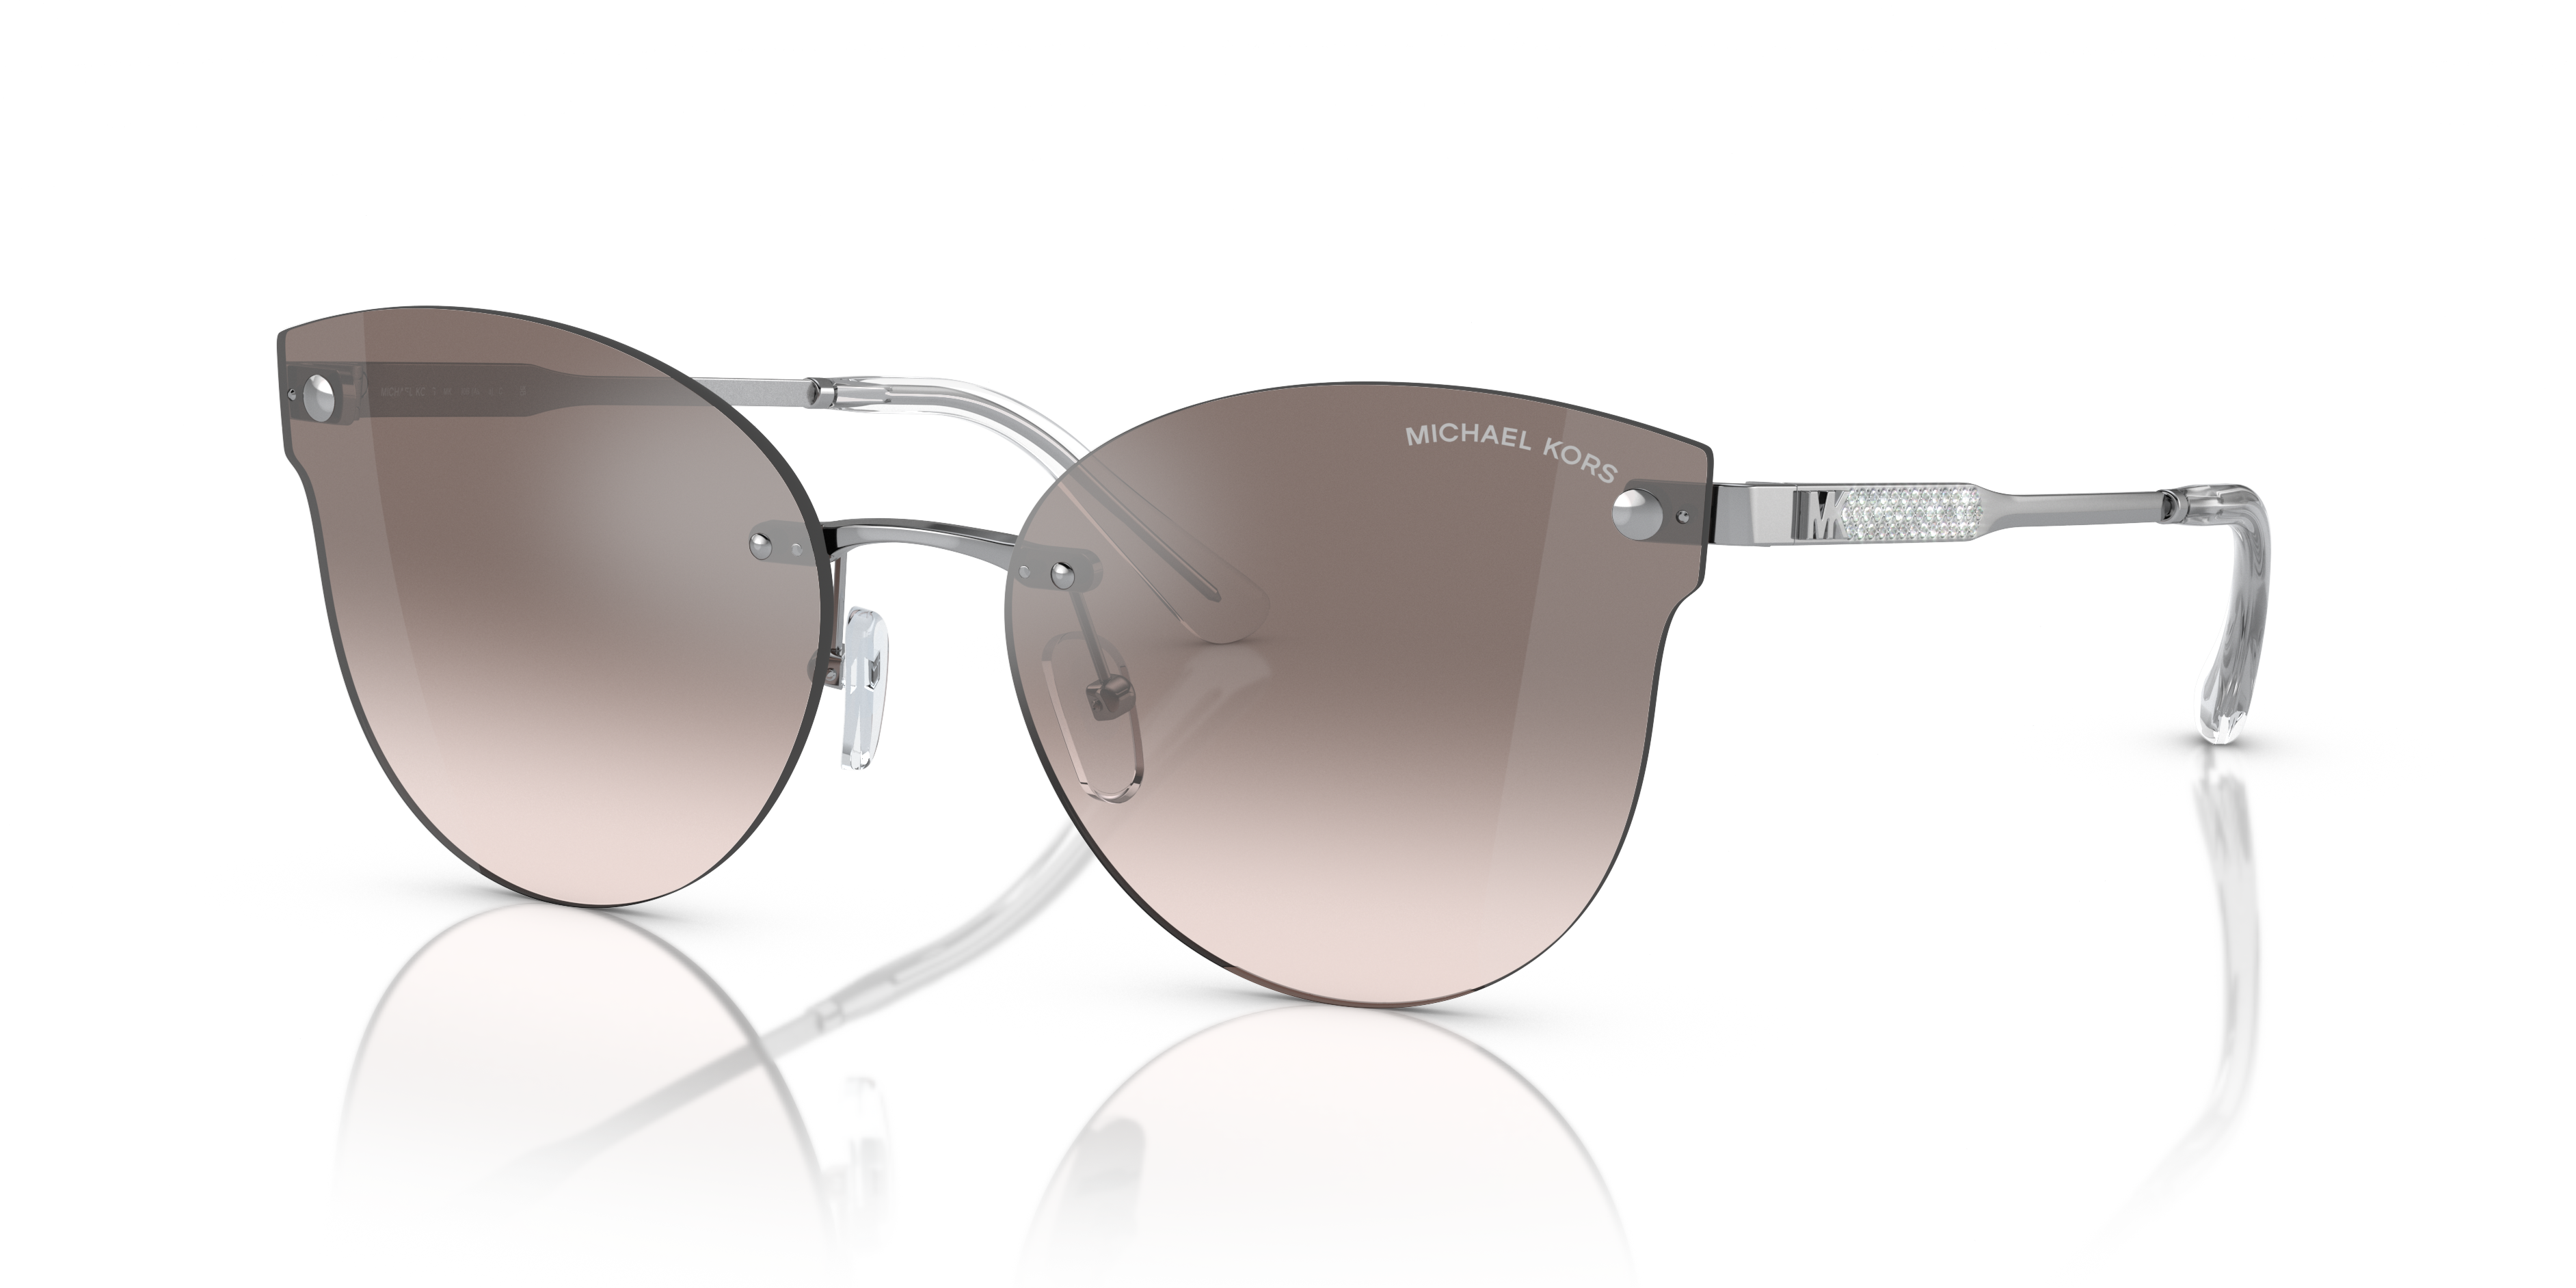 Michael Kors MK5007 HVAR Sunglasses  104525 Rose Gold  White  Blue Mirror  Lens 5914135  EZContactscom